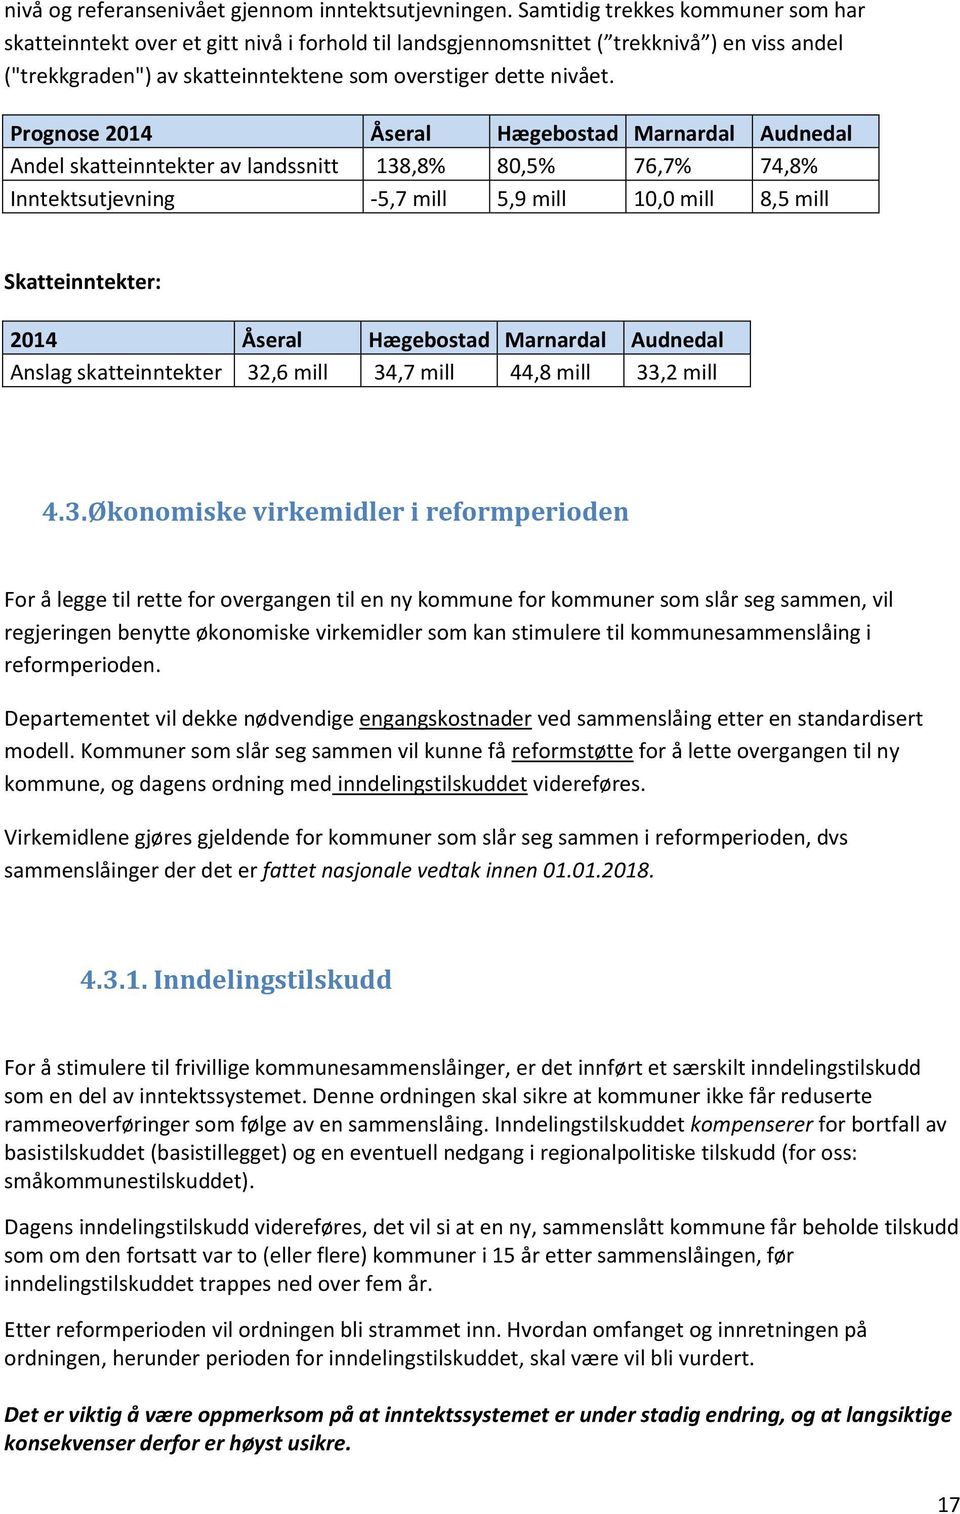 Prognose 2014 Åseral Hægebostad Marnardal Audnedal Andel skatteinntekter av landssnitt 138,8% 80,5% 76,7% 74,8% Inntektsutjevning -5,7 mill 5,9 mill 10,0 mill 8,5 mill Skatteinntekter: 2014 Åseral